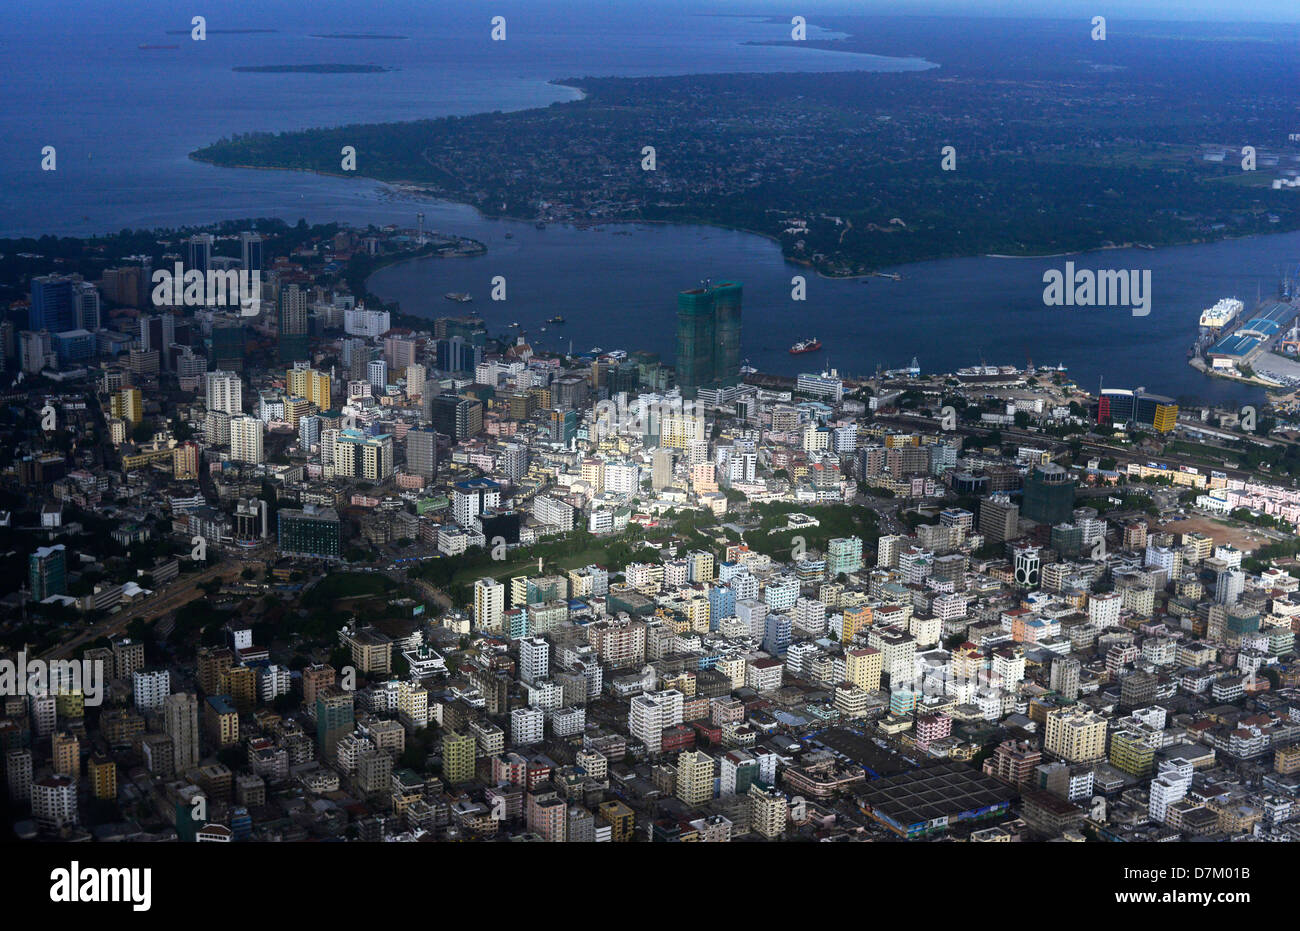 An aerial view of Dar es Salaam - capital of Tanzania. Stock Photo